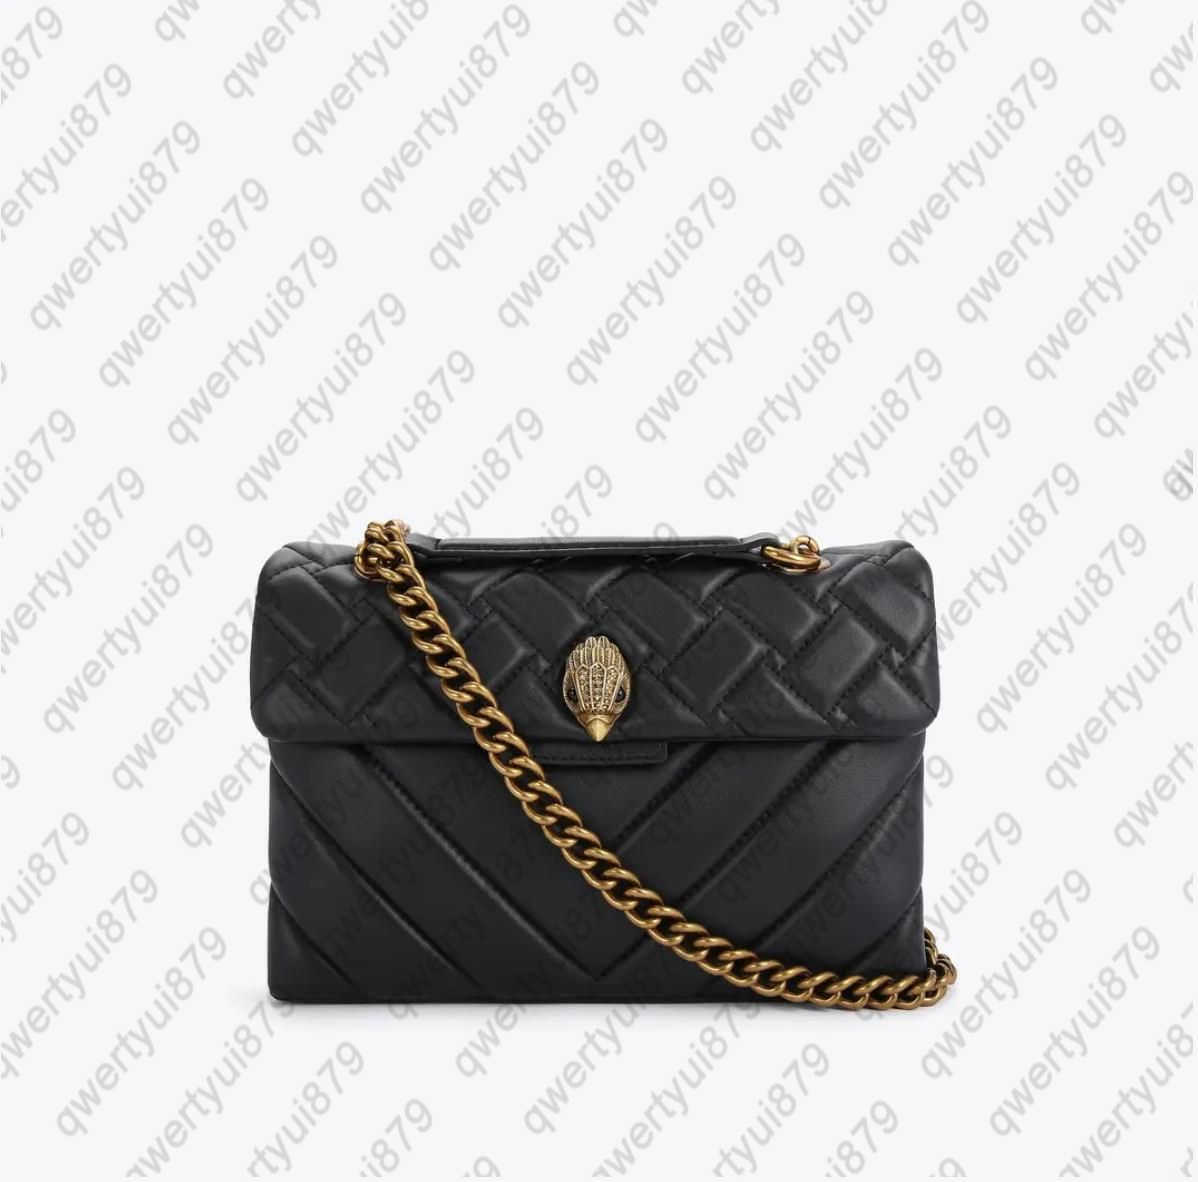 

Kurt Shoulder Bags Geiger London Kensington Medium Real Leather Handbags Luxury Black Gold/Silver Chains Shoulder Bag Cross Body Purse and